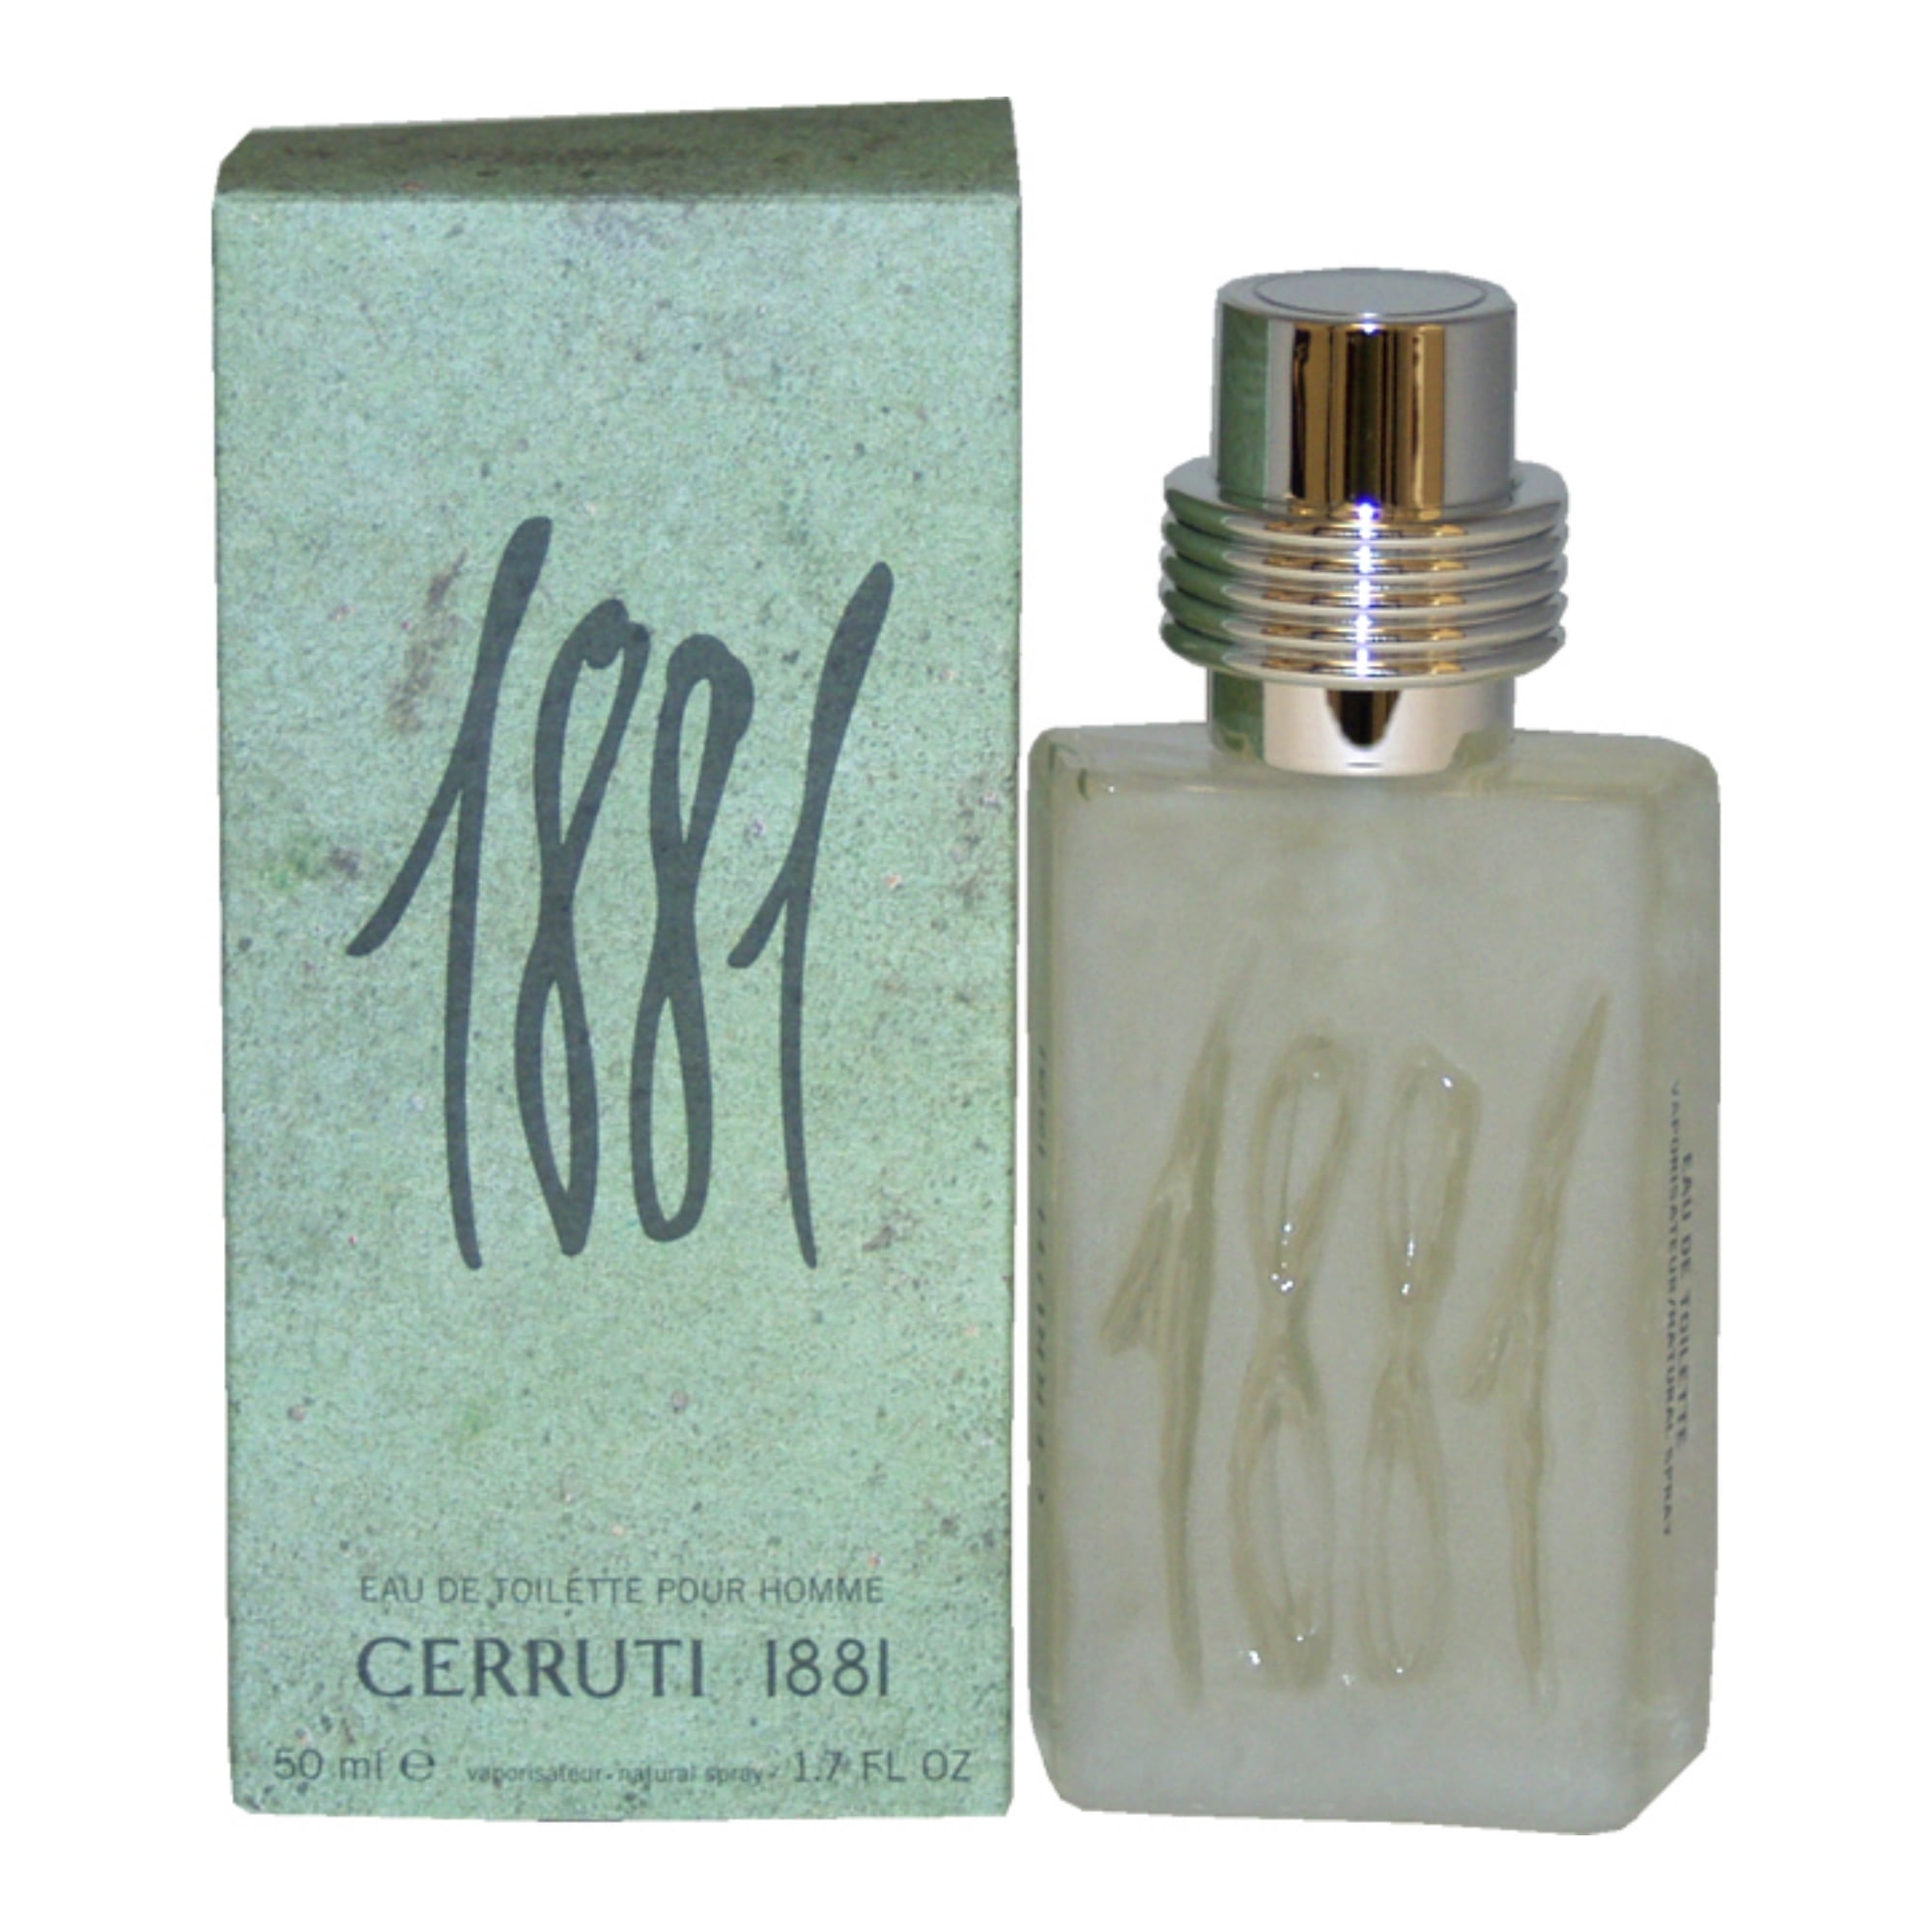 Nino Cerruti - Nino Cerruti 1881 EDT for Men 1.7 oz / 50 ml - SPR ...